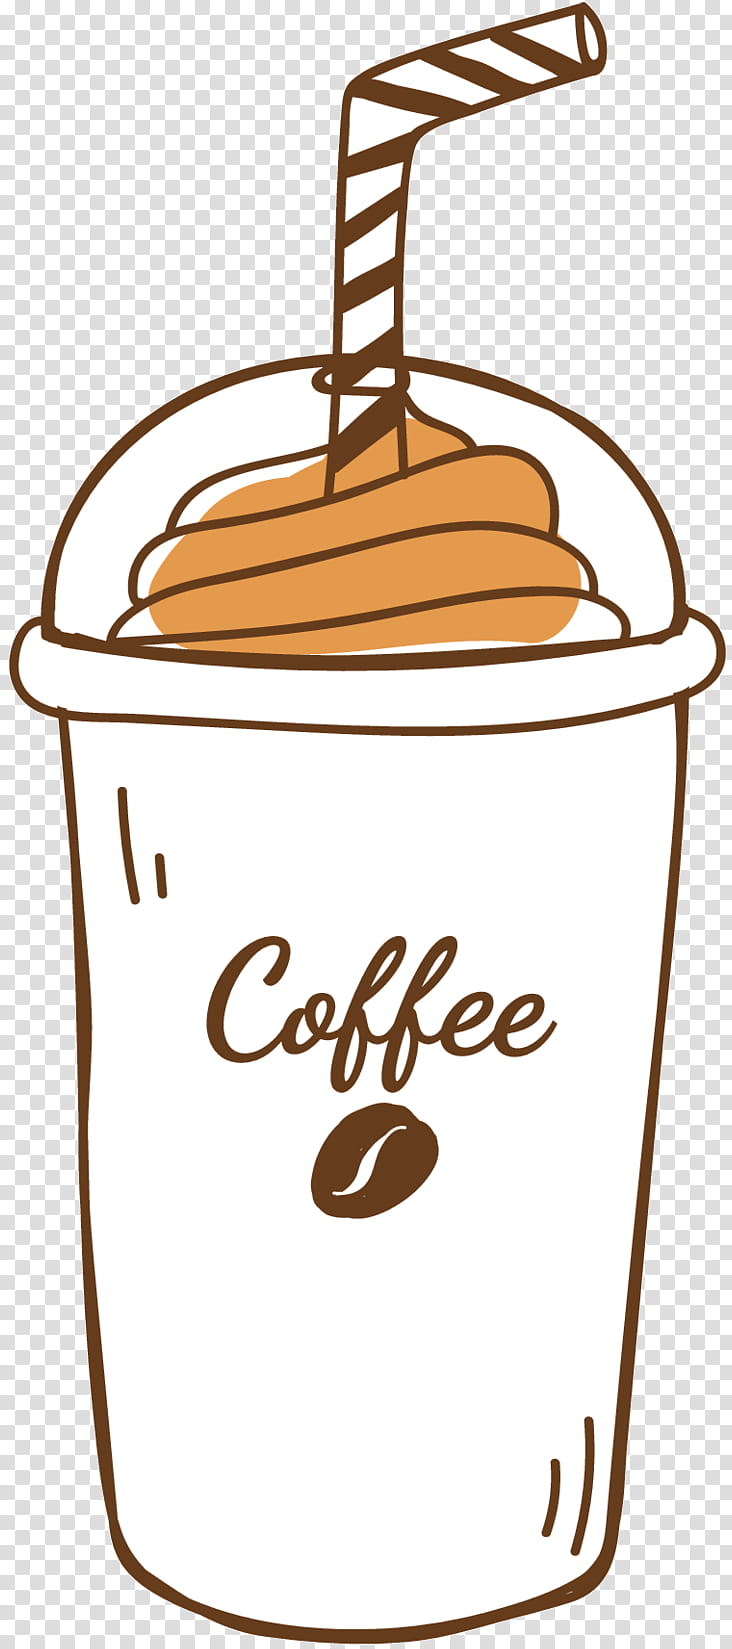 Frozen Food, Cafe, Coffee, Moka Pot, Iced Coffee, Logo, Dairy, Frozen Dessert transparent background PNG clipart